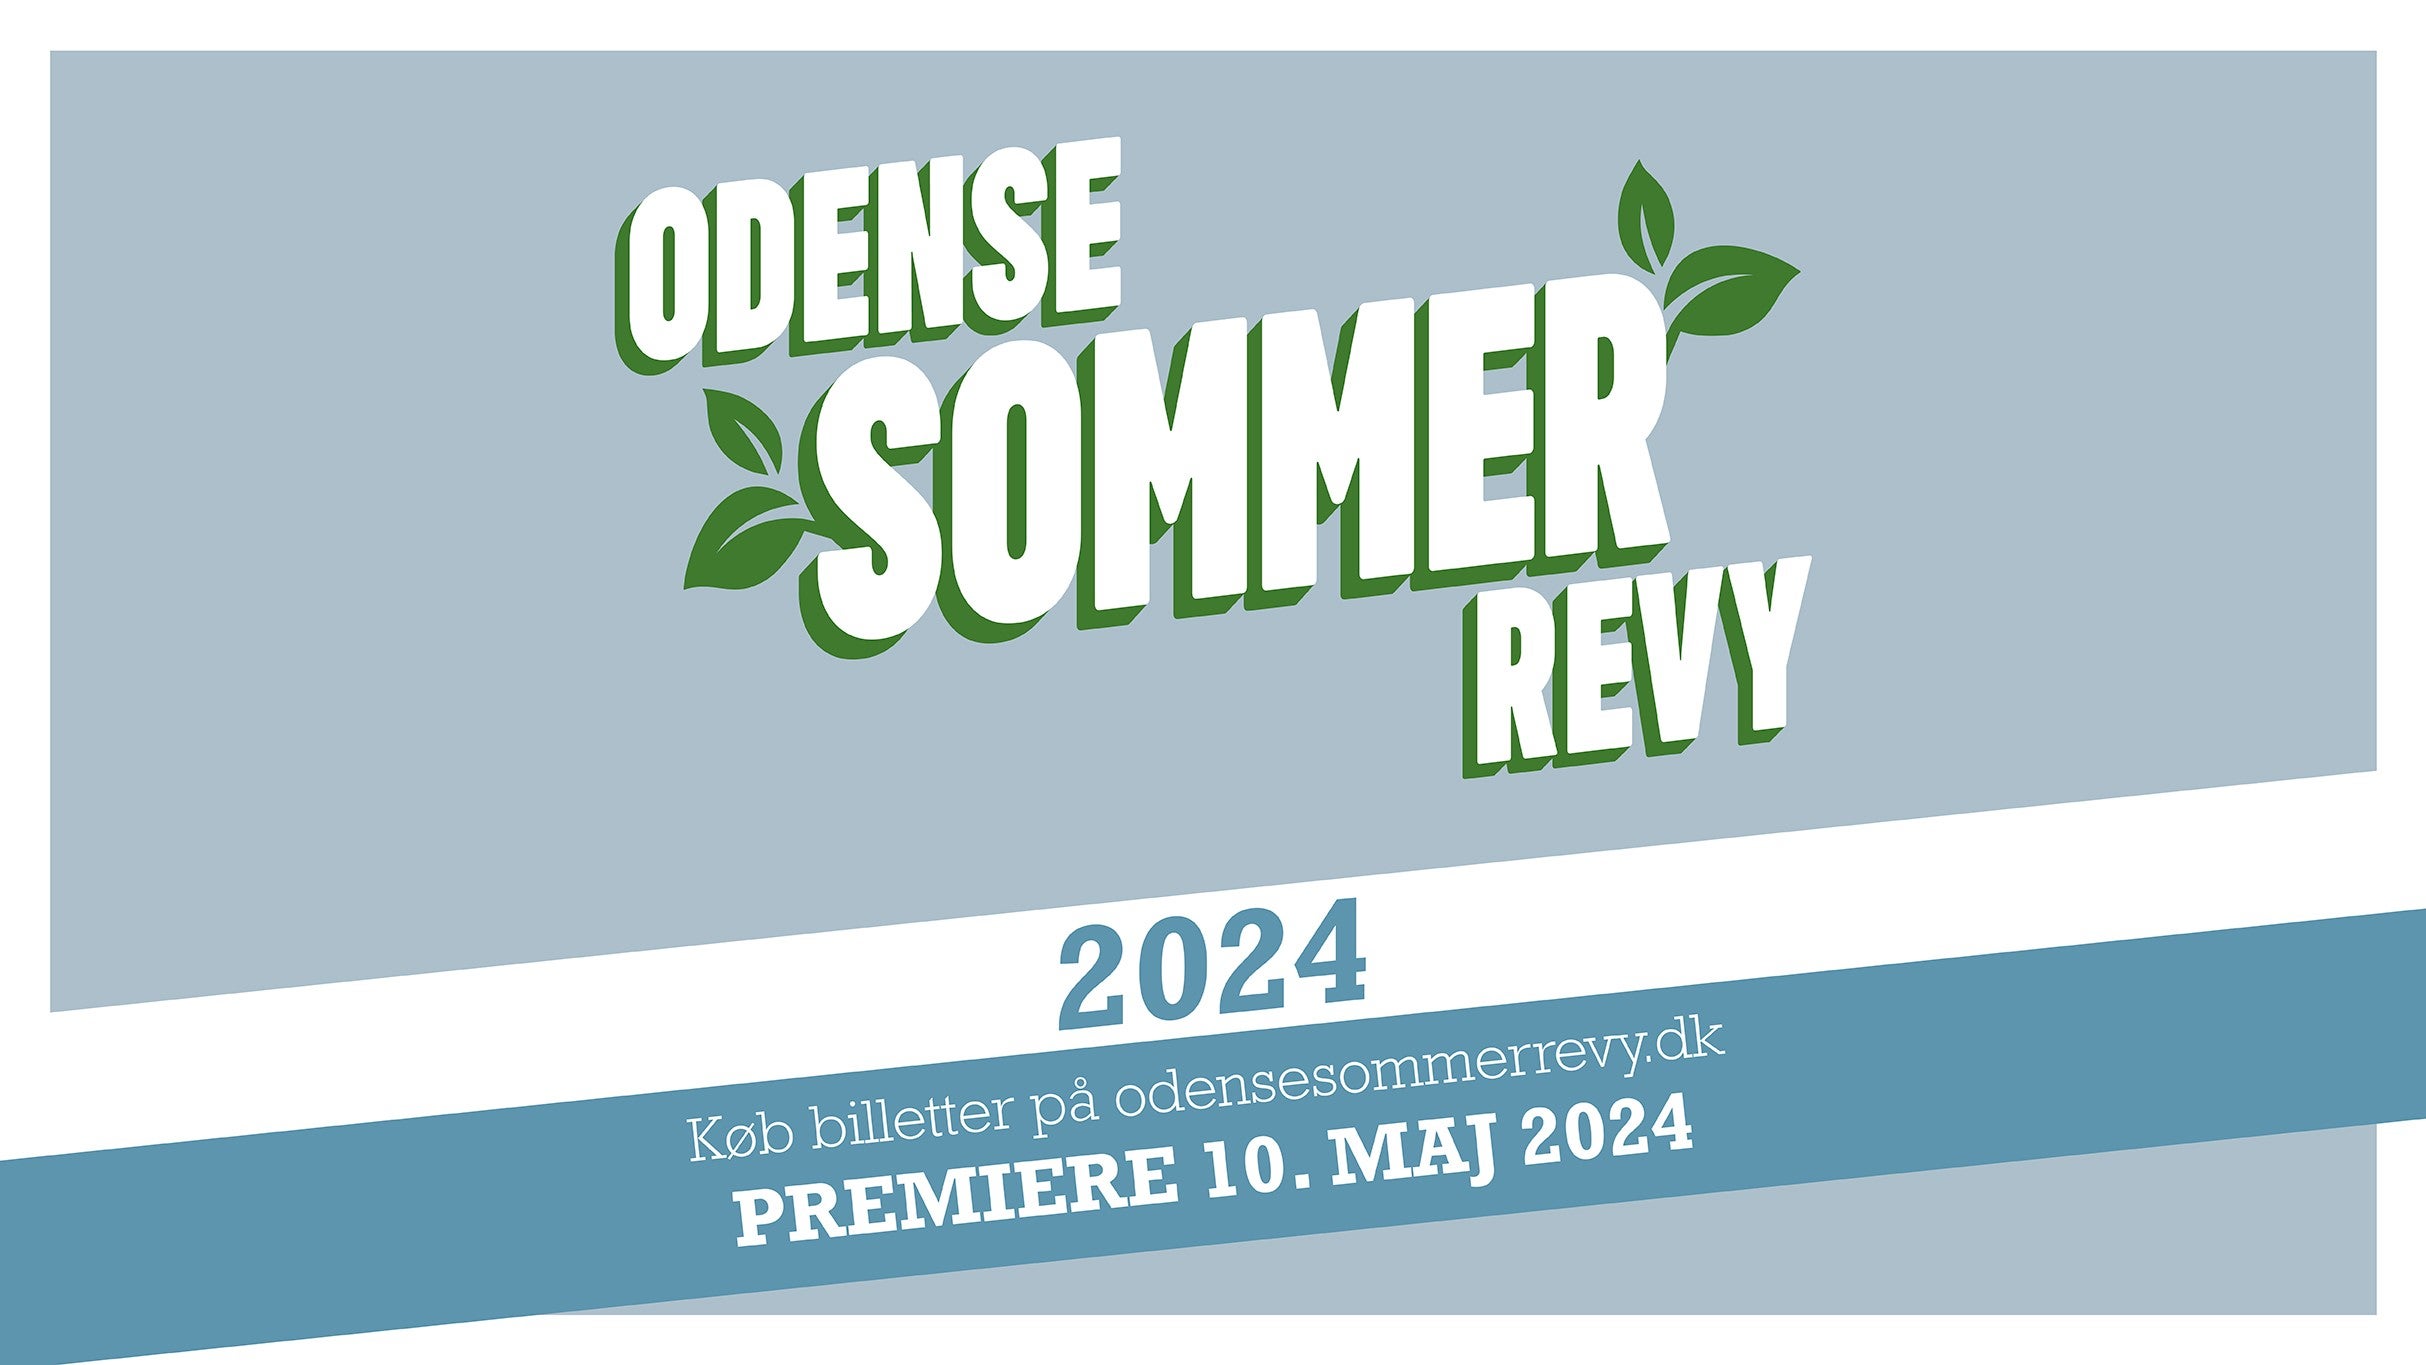 Odense Sommerrevy 2024 presale information on freepresalepasswords.com